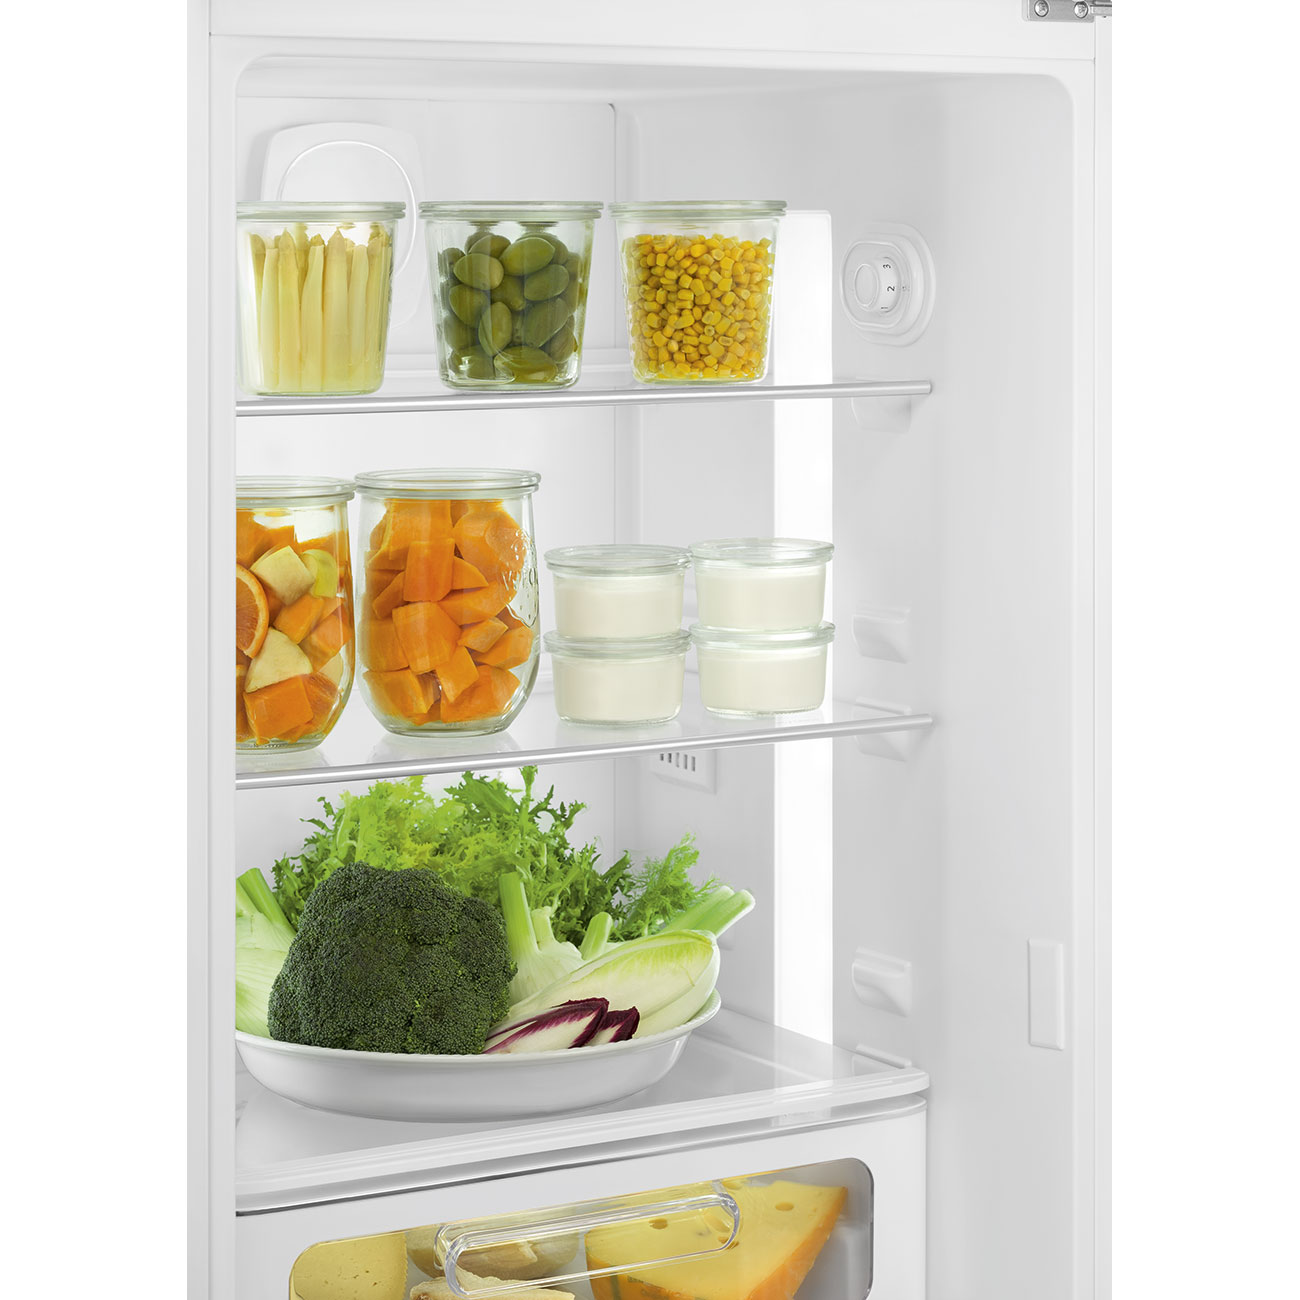 Pastel green refrigerator - Smeg_6